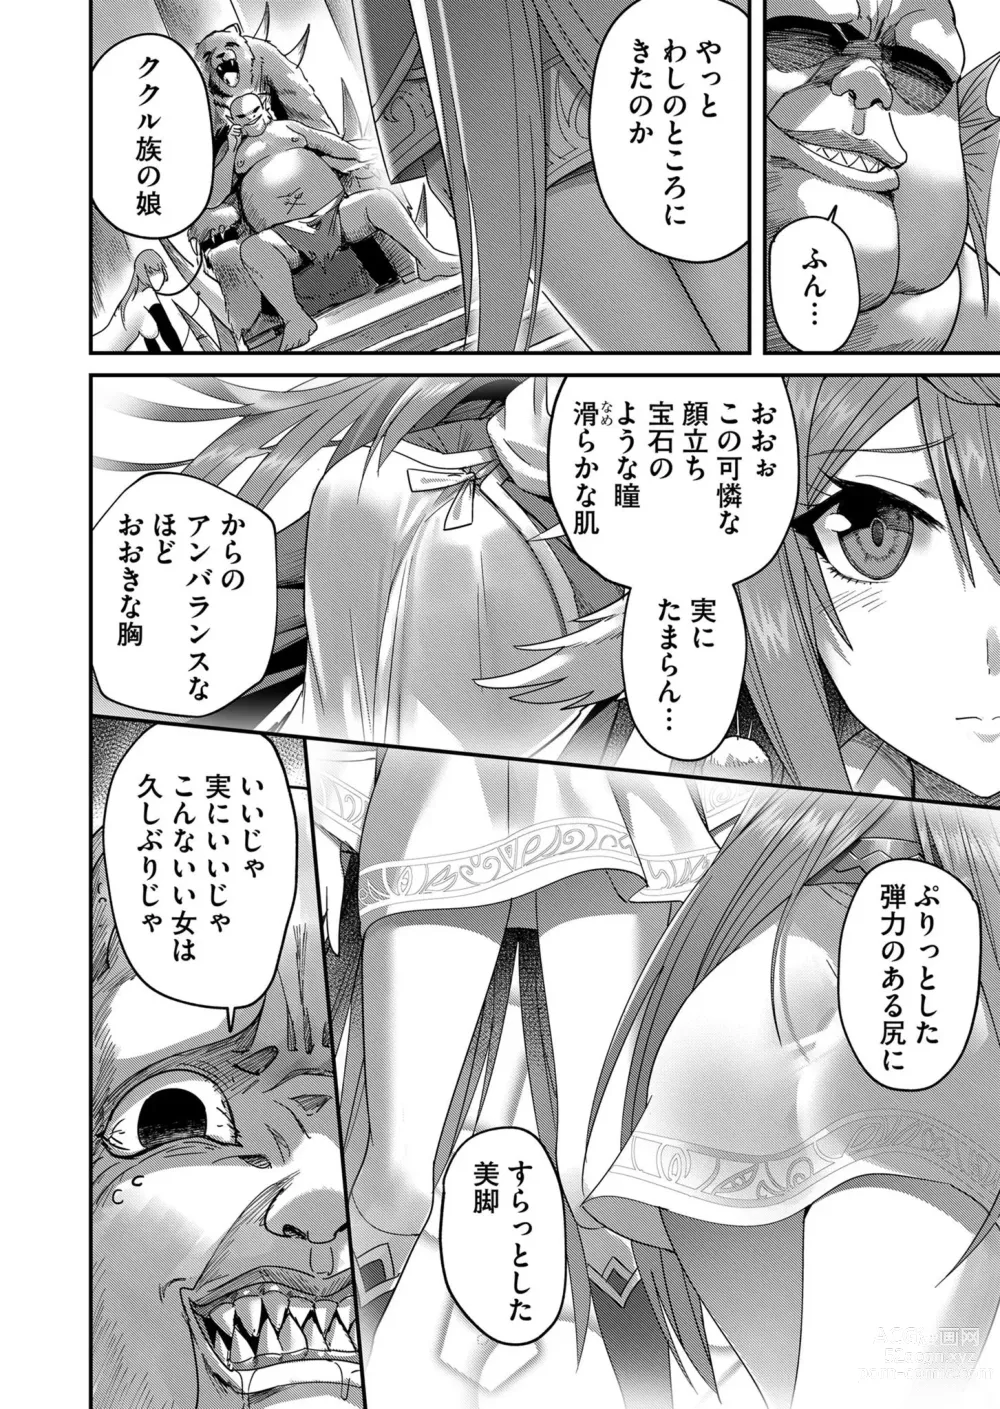 Page 168 of manga Kichiku Eiyuu Vol.01